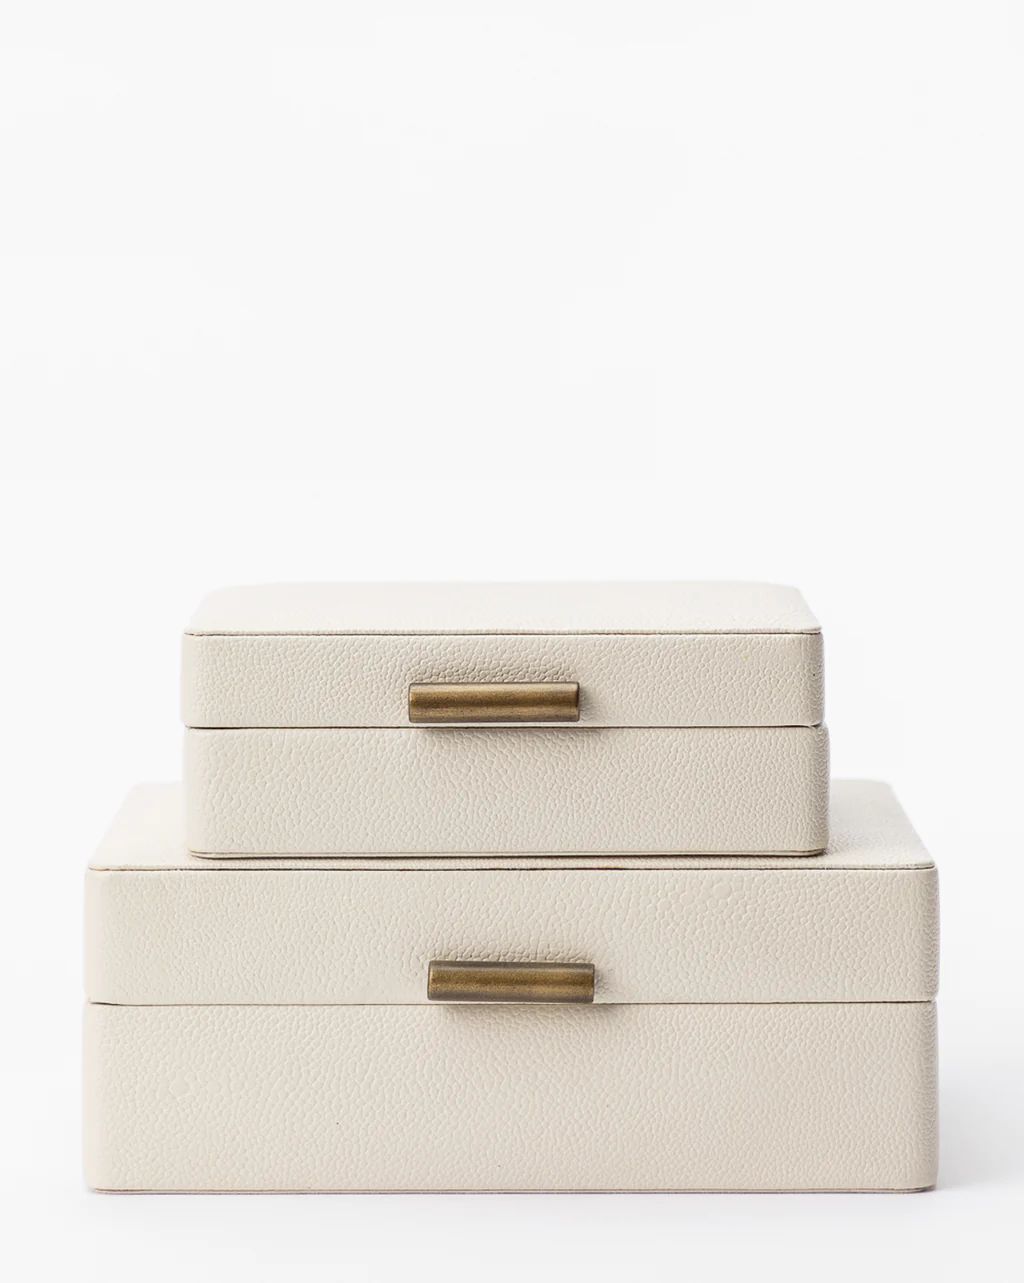 White Shagreen Box | McGee & Co.